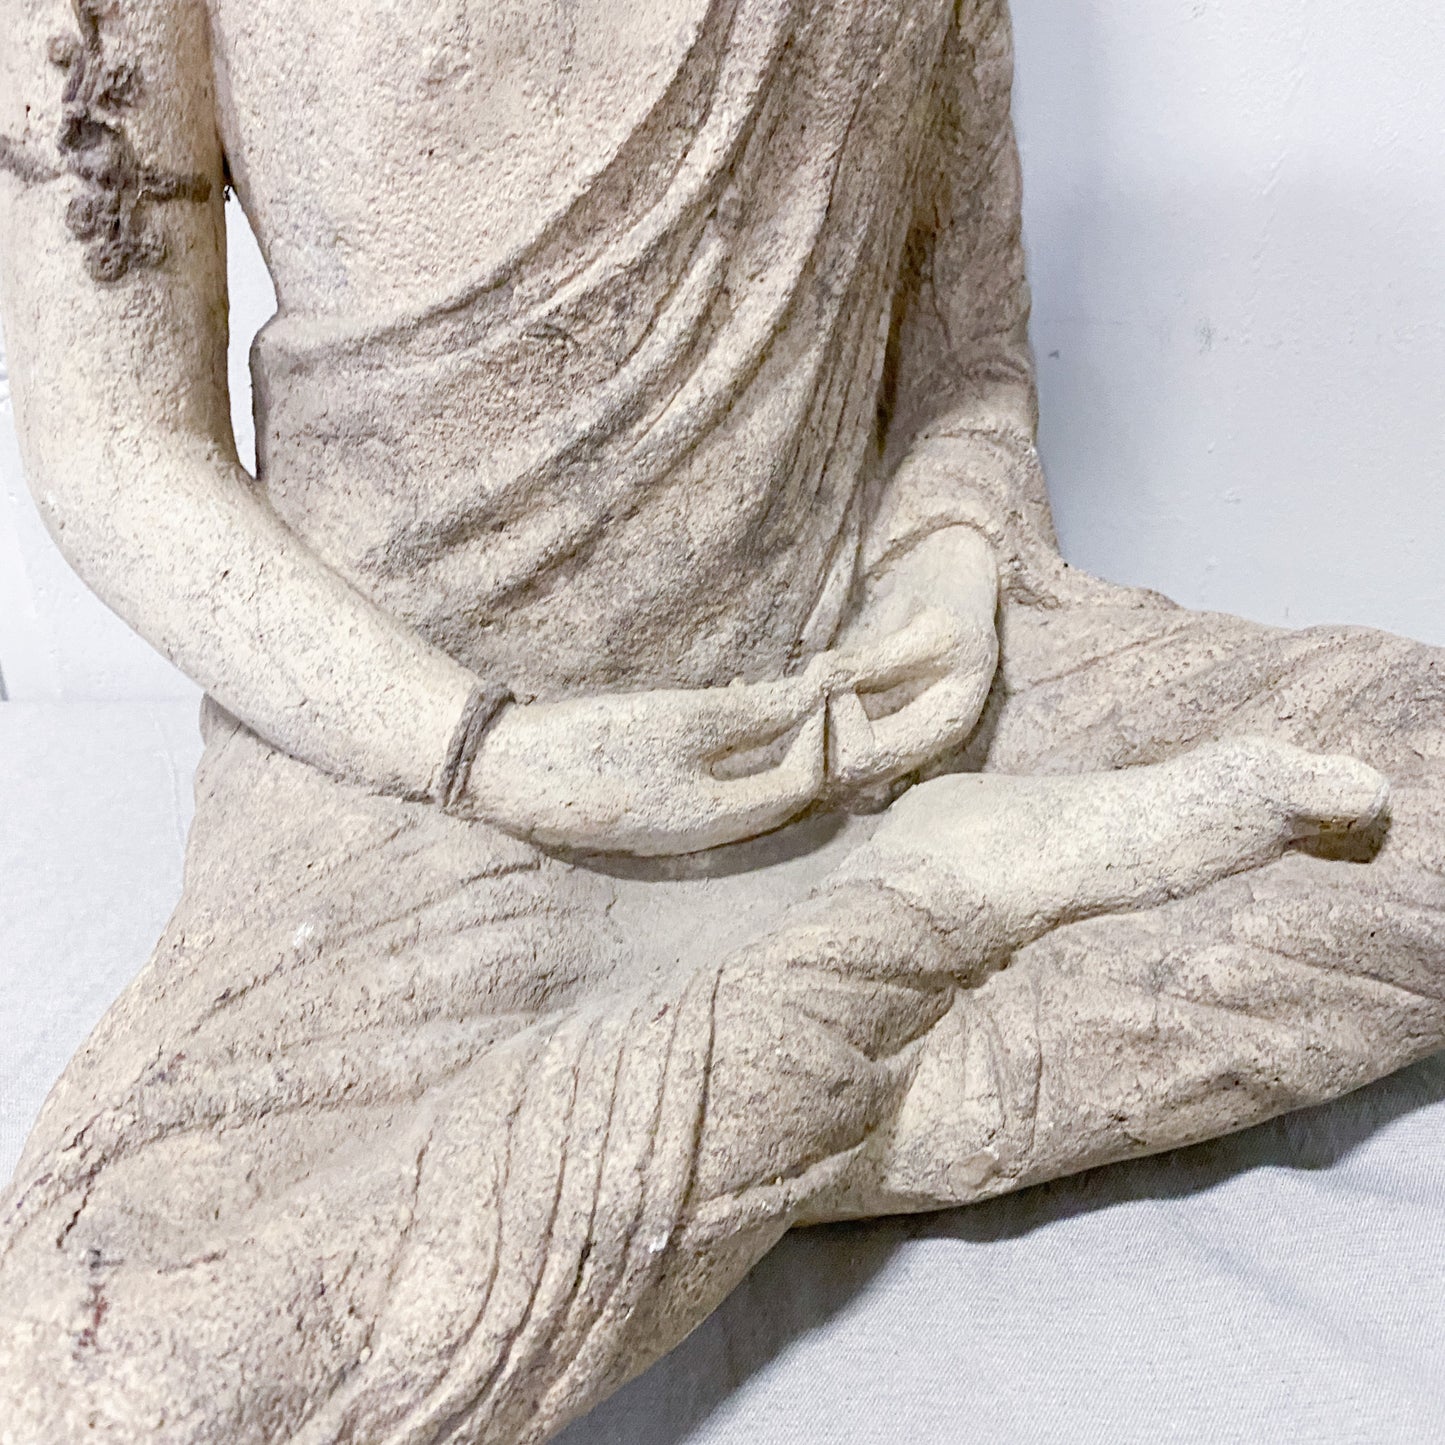 31" Budda Statue